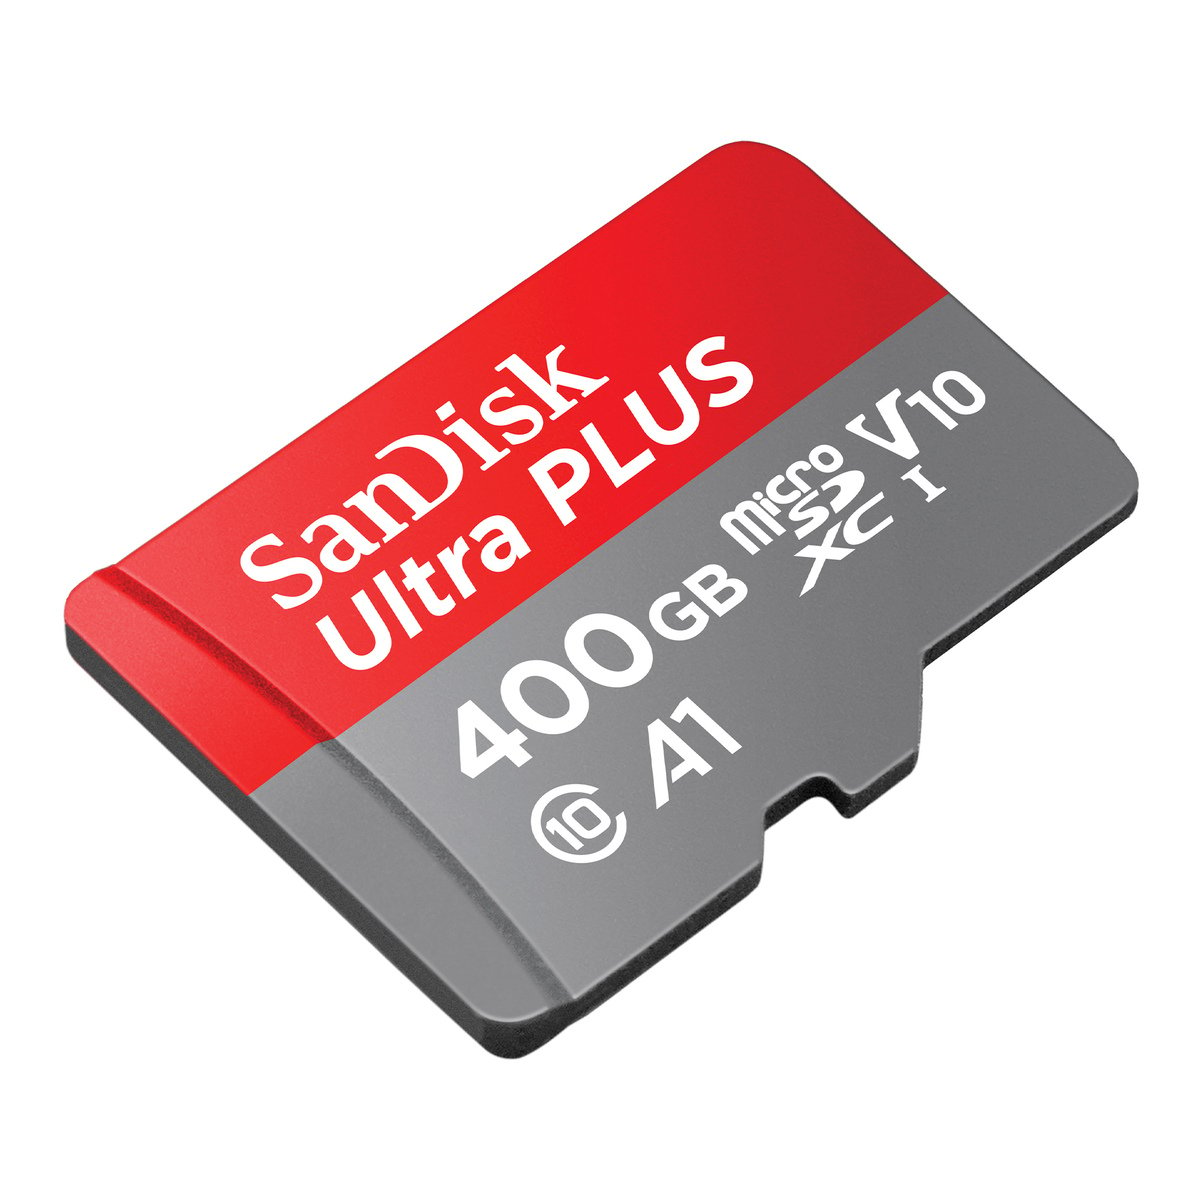 SanDisk Ultra microSDXC, 400GB, U1, C10, A1, UHS-1, 100MB/s R